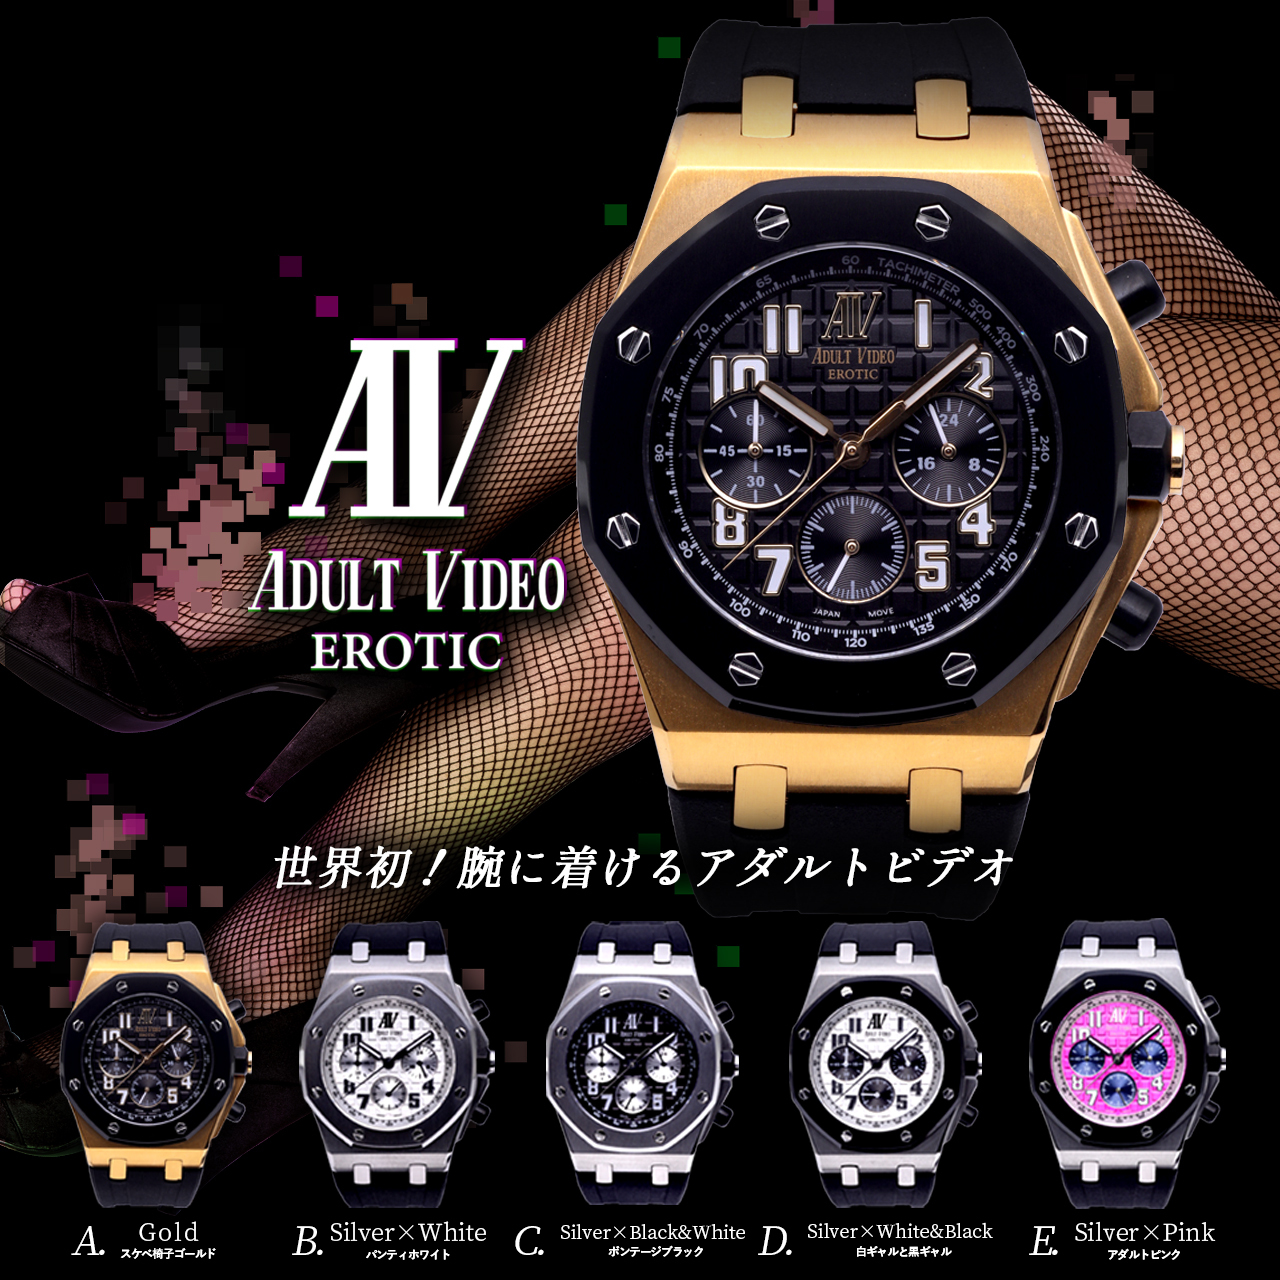 Adult Video Erotic アダルトビデオ エロティック 日本製 ムーブメント Vk63搭載 金時計 銀時計 オマージュ メンズ 腕時計 公式 変態高級腕時計 Omeco オメコ オンラインショップ